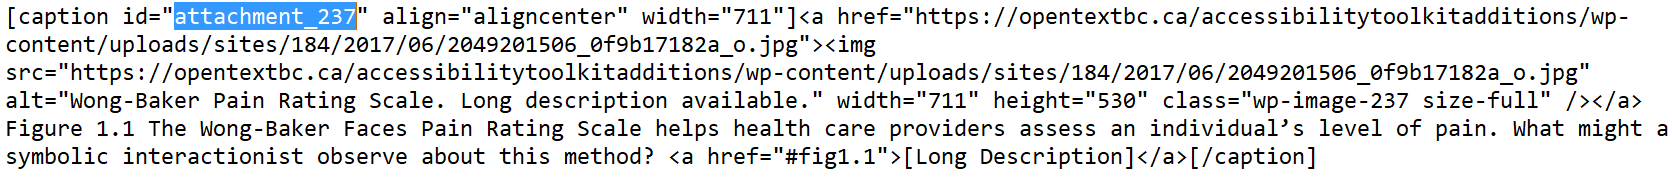 Sample html markup highlighting the caption id